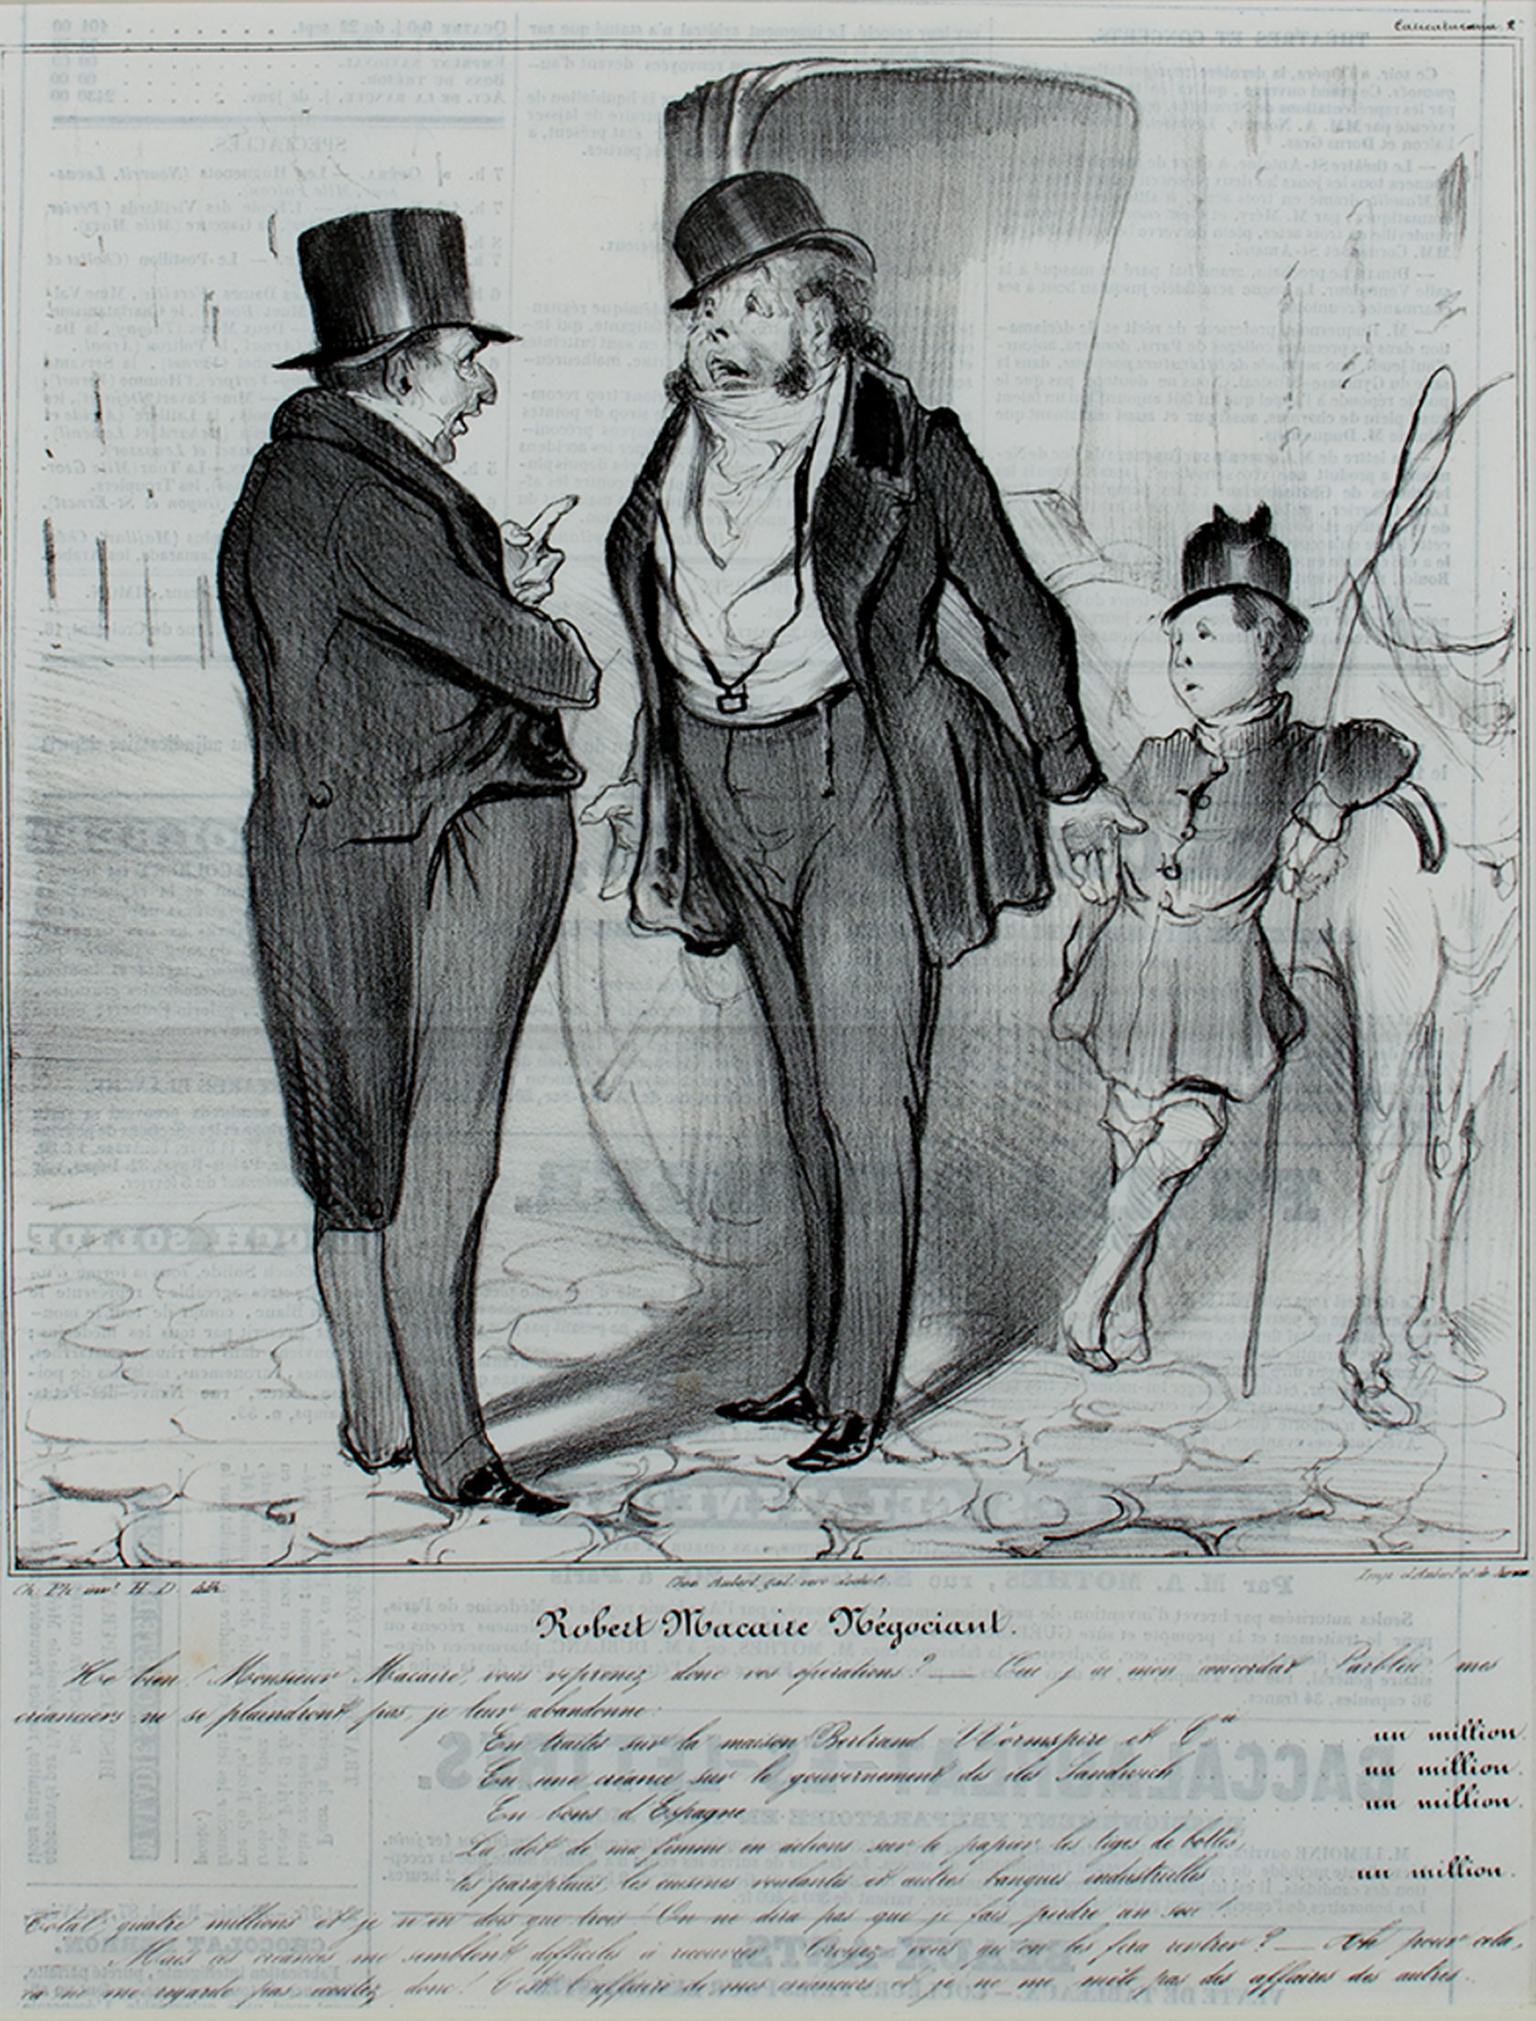 Honoré Daumier Figurative Print - 19th century lithograph caricature black and white satirical figurative print